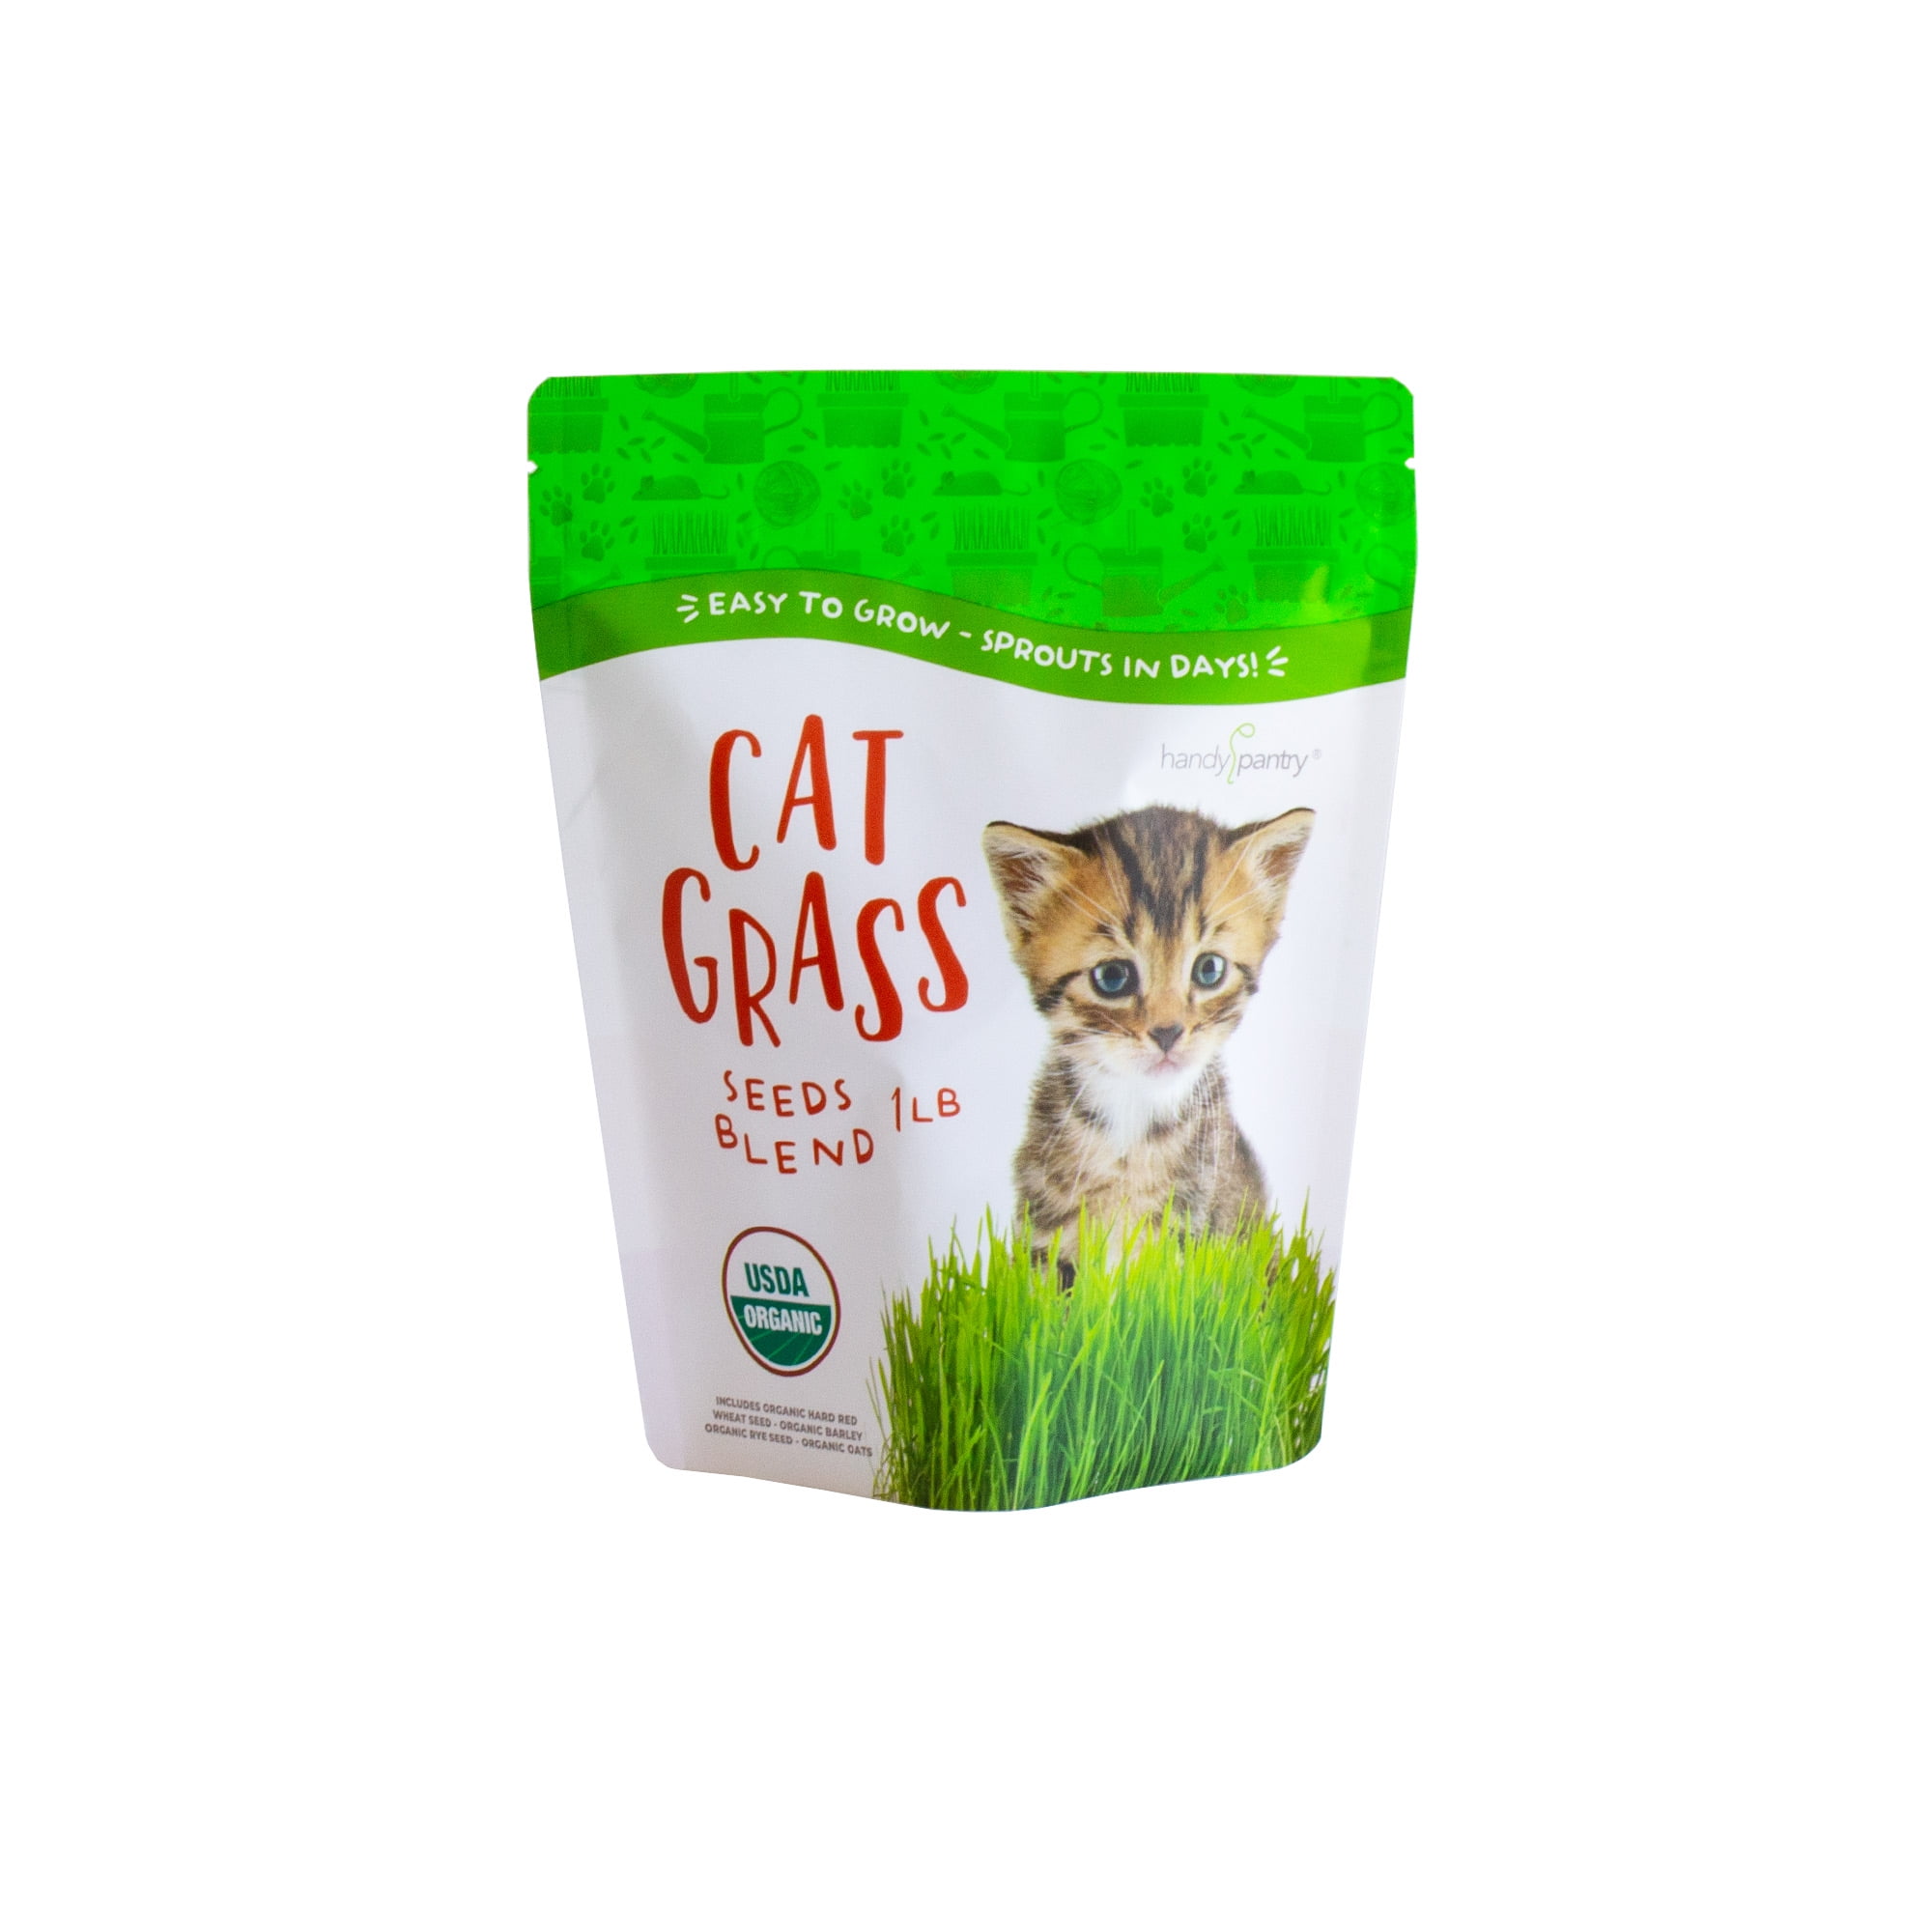 Feline Digestive HARD RED WINTER WHEAT 200 SEEDS ORGANIC CAT GRASS 